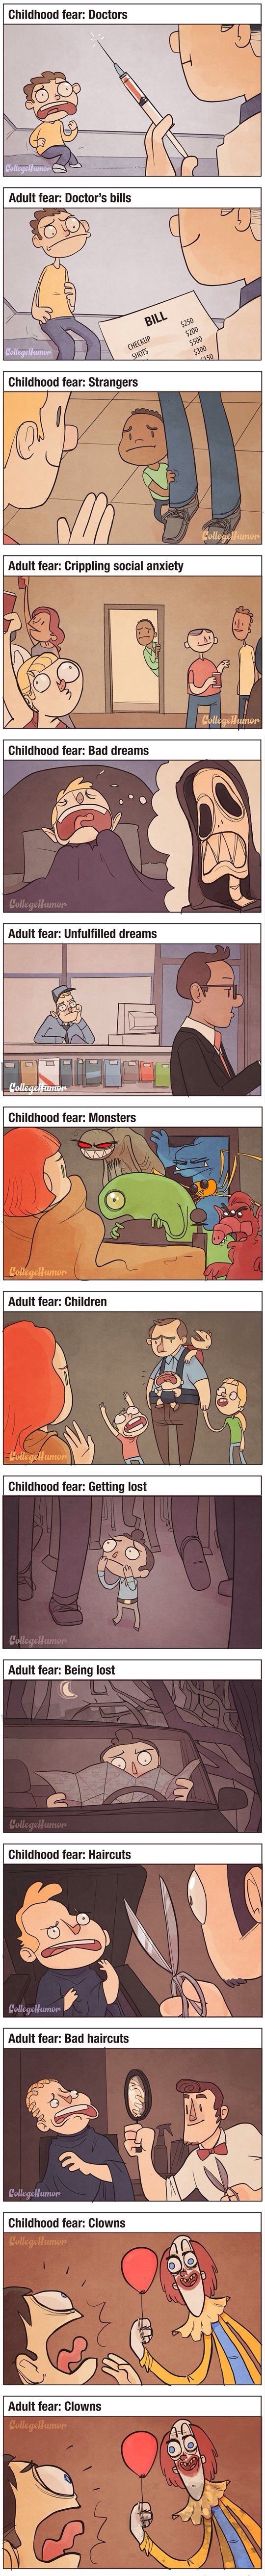 Childhood vs adult fears